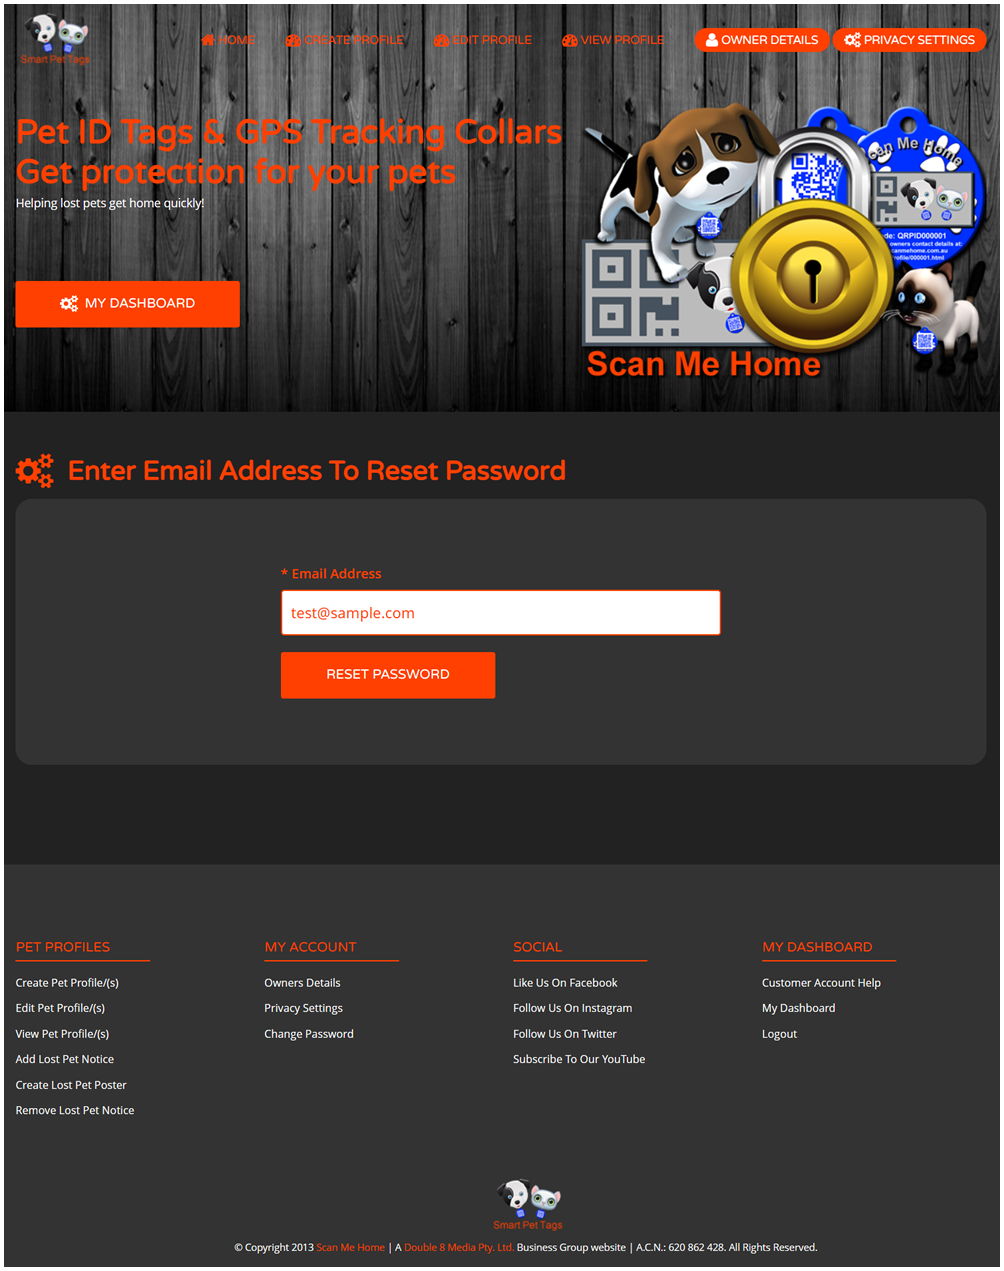 Scan Me Home Customer Account Help My Dashboard Change Password Image 2